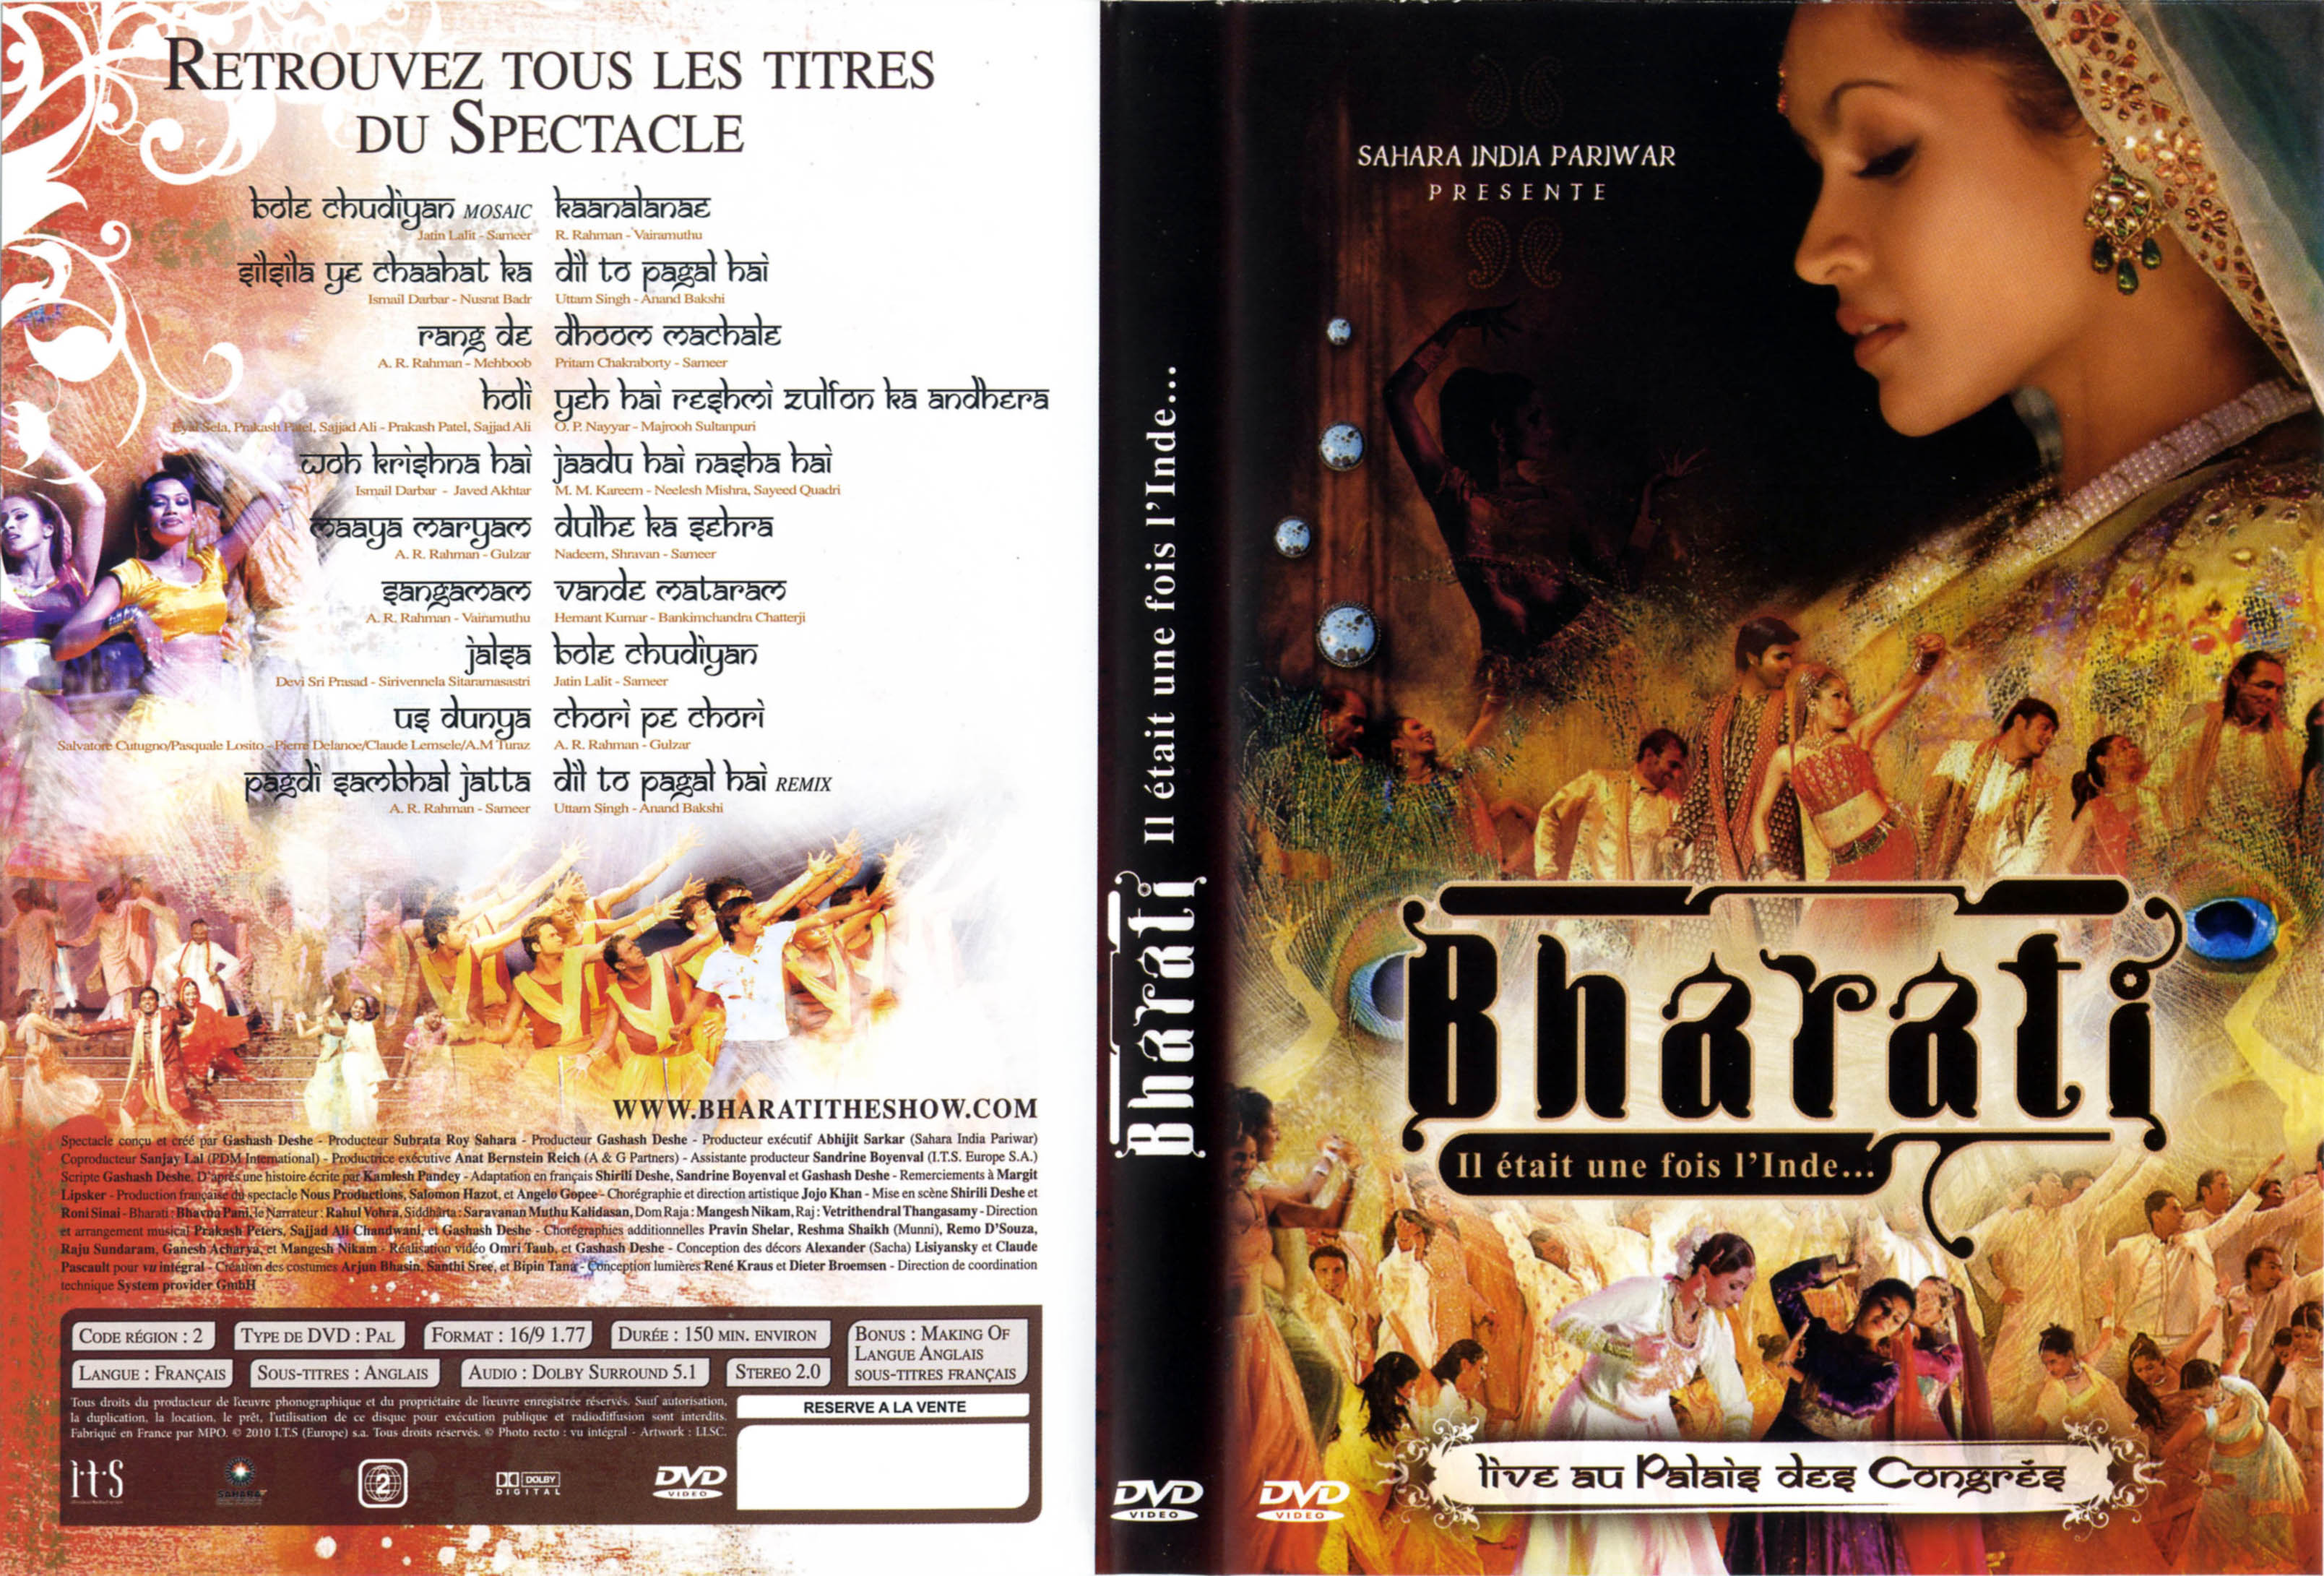 Jaquette DVD Bharati